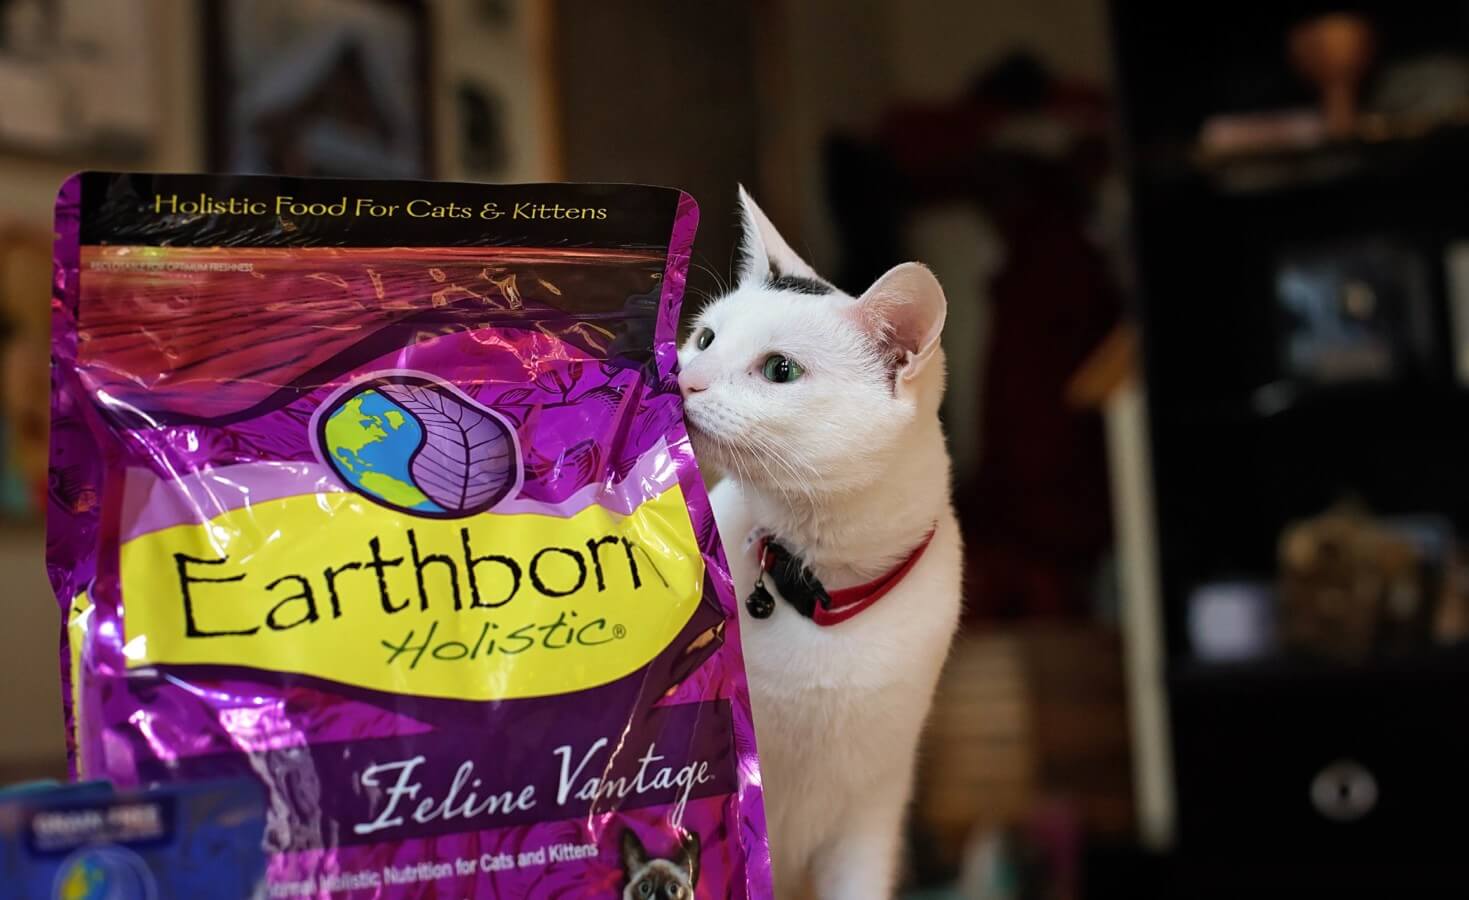 A cat sniffs a bag of Earthborn Holistic Feline Vantage cat food